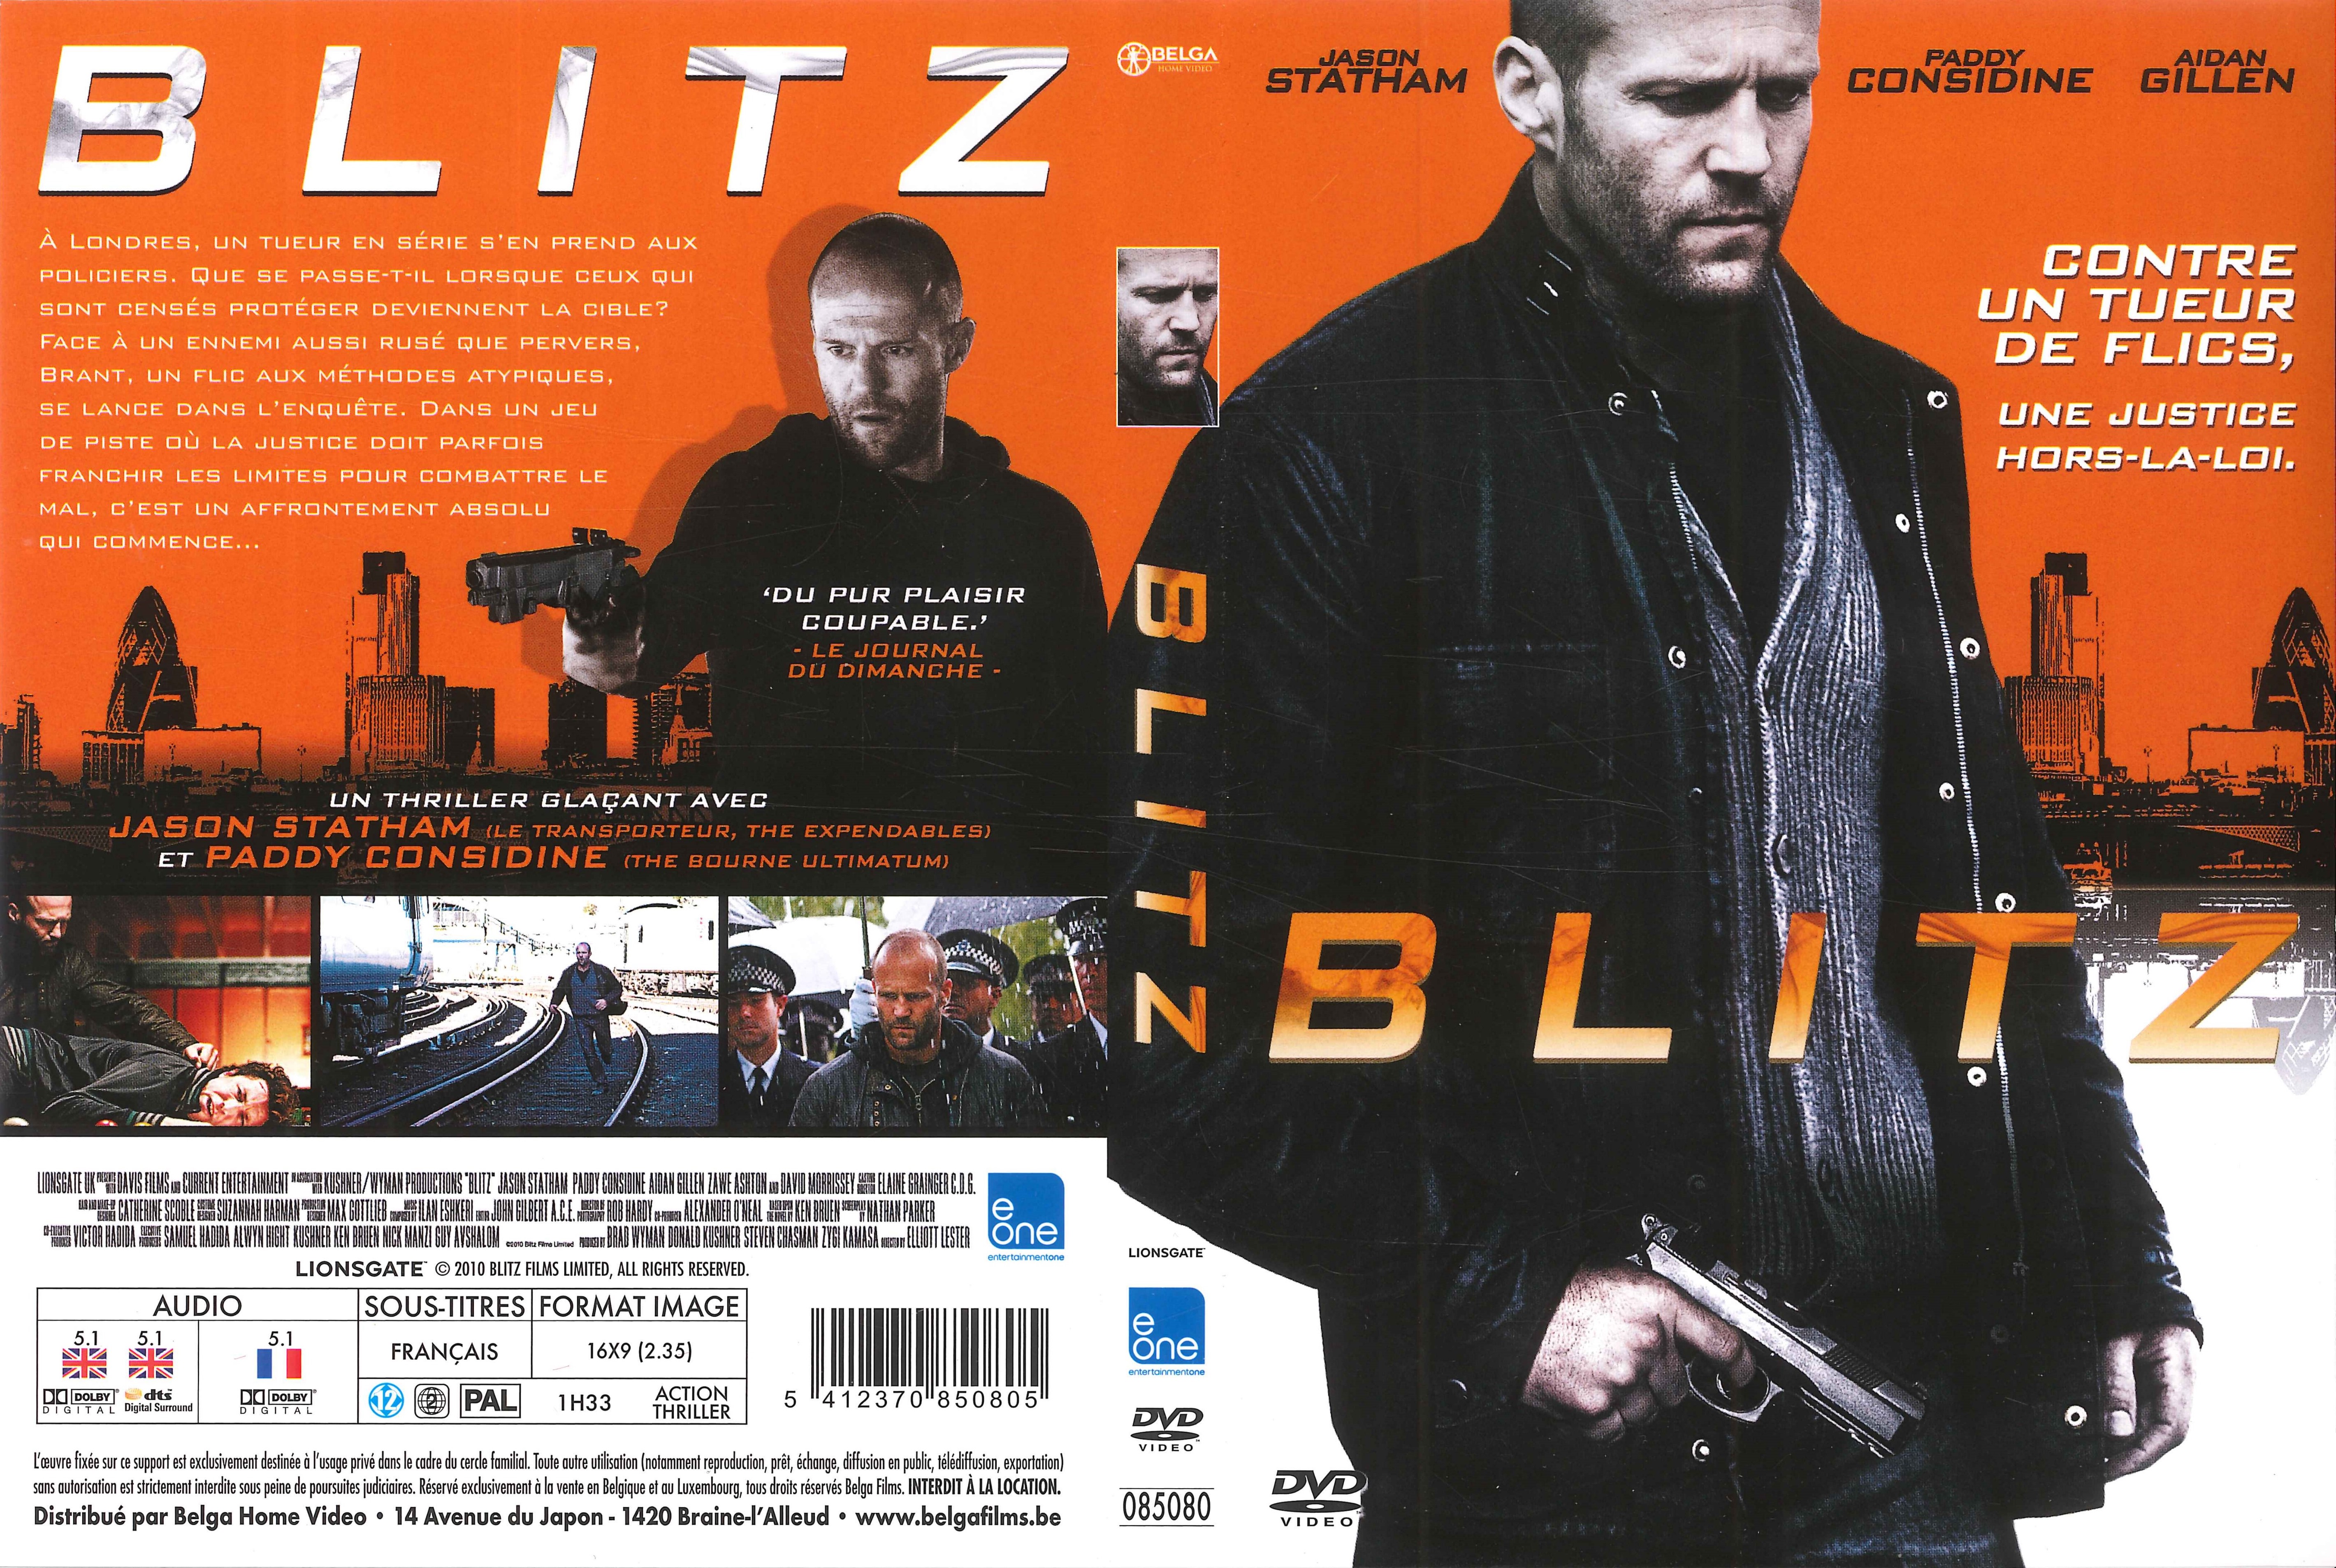 Jaquette DVD Blitz v2